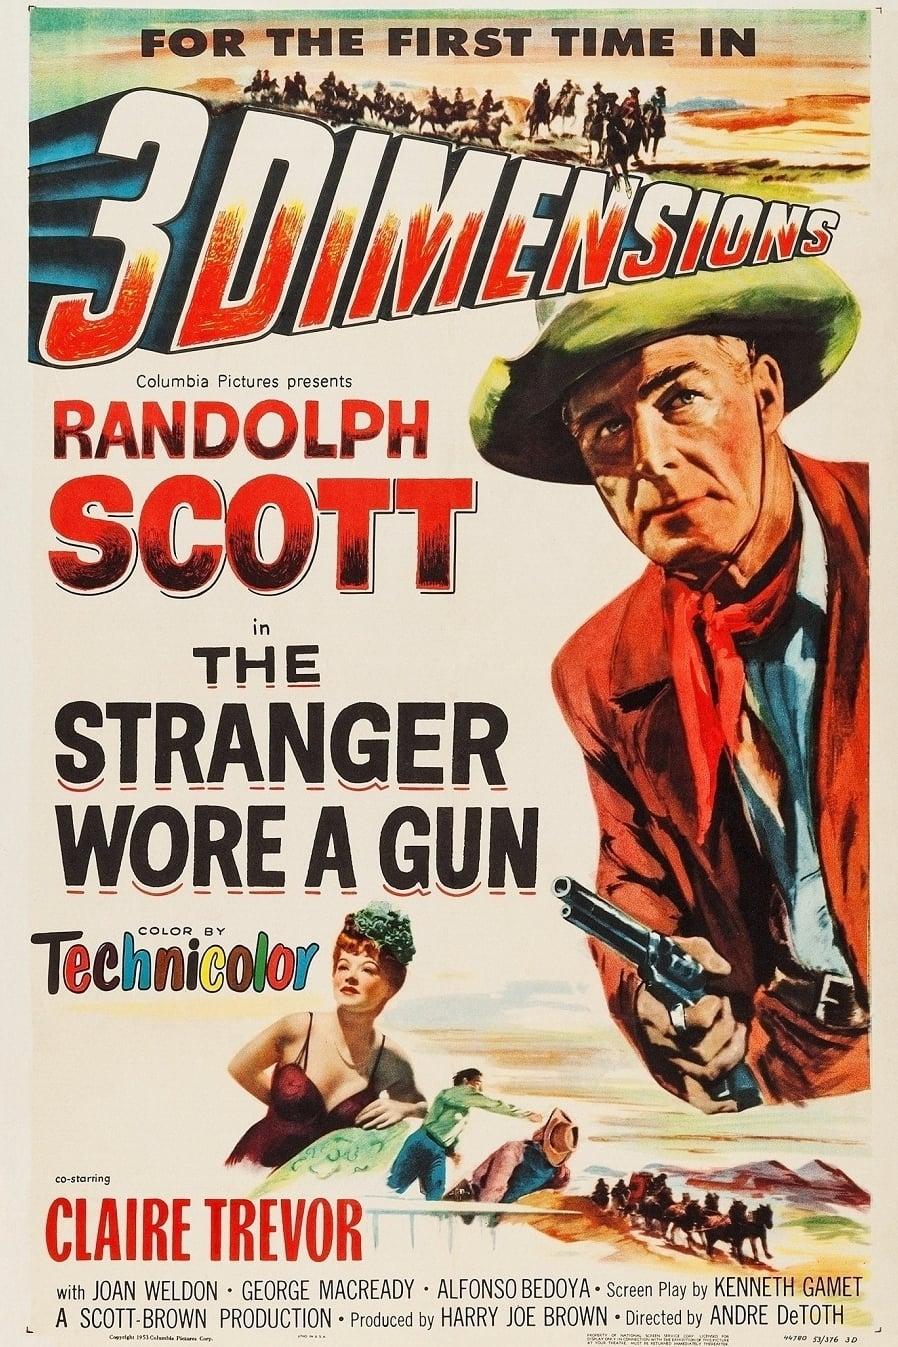 A fegyveres idegen (The Stranger Wore a Gun) 1953.